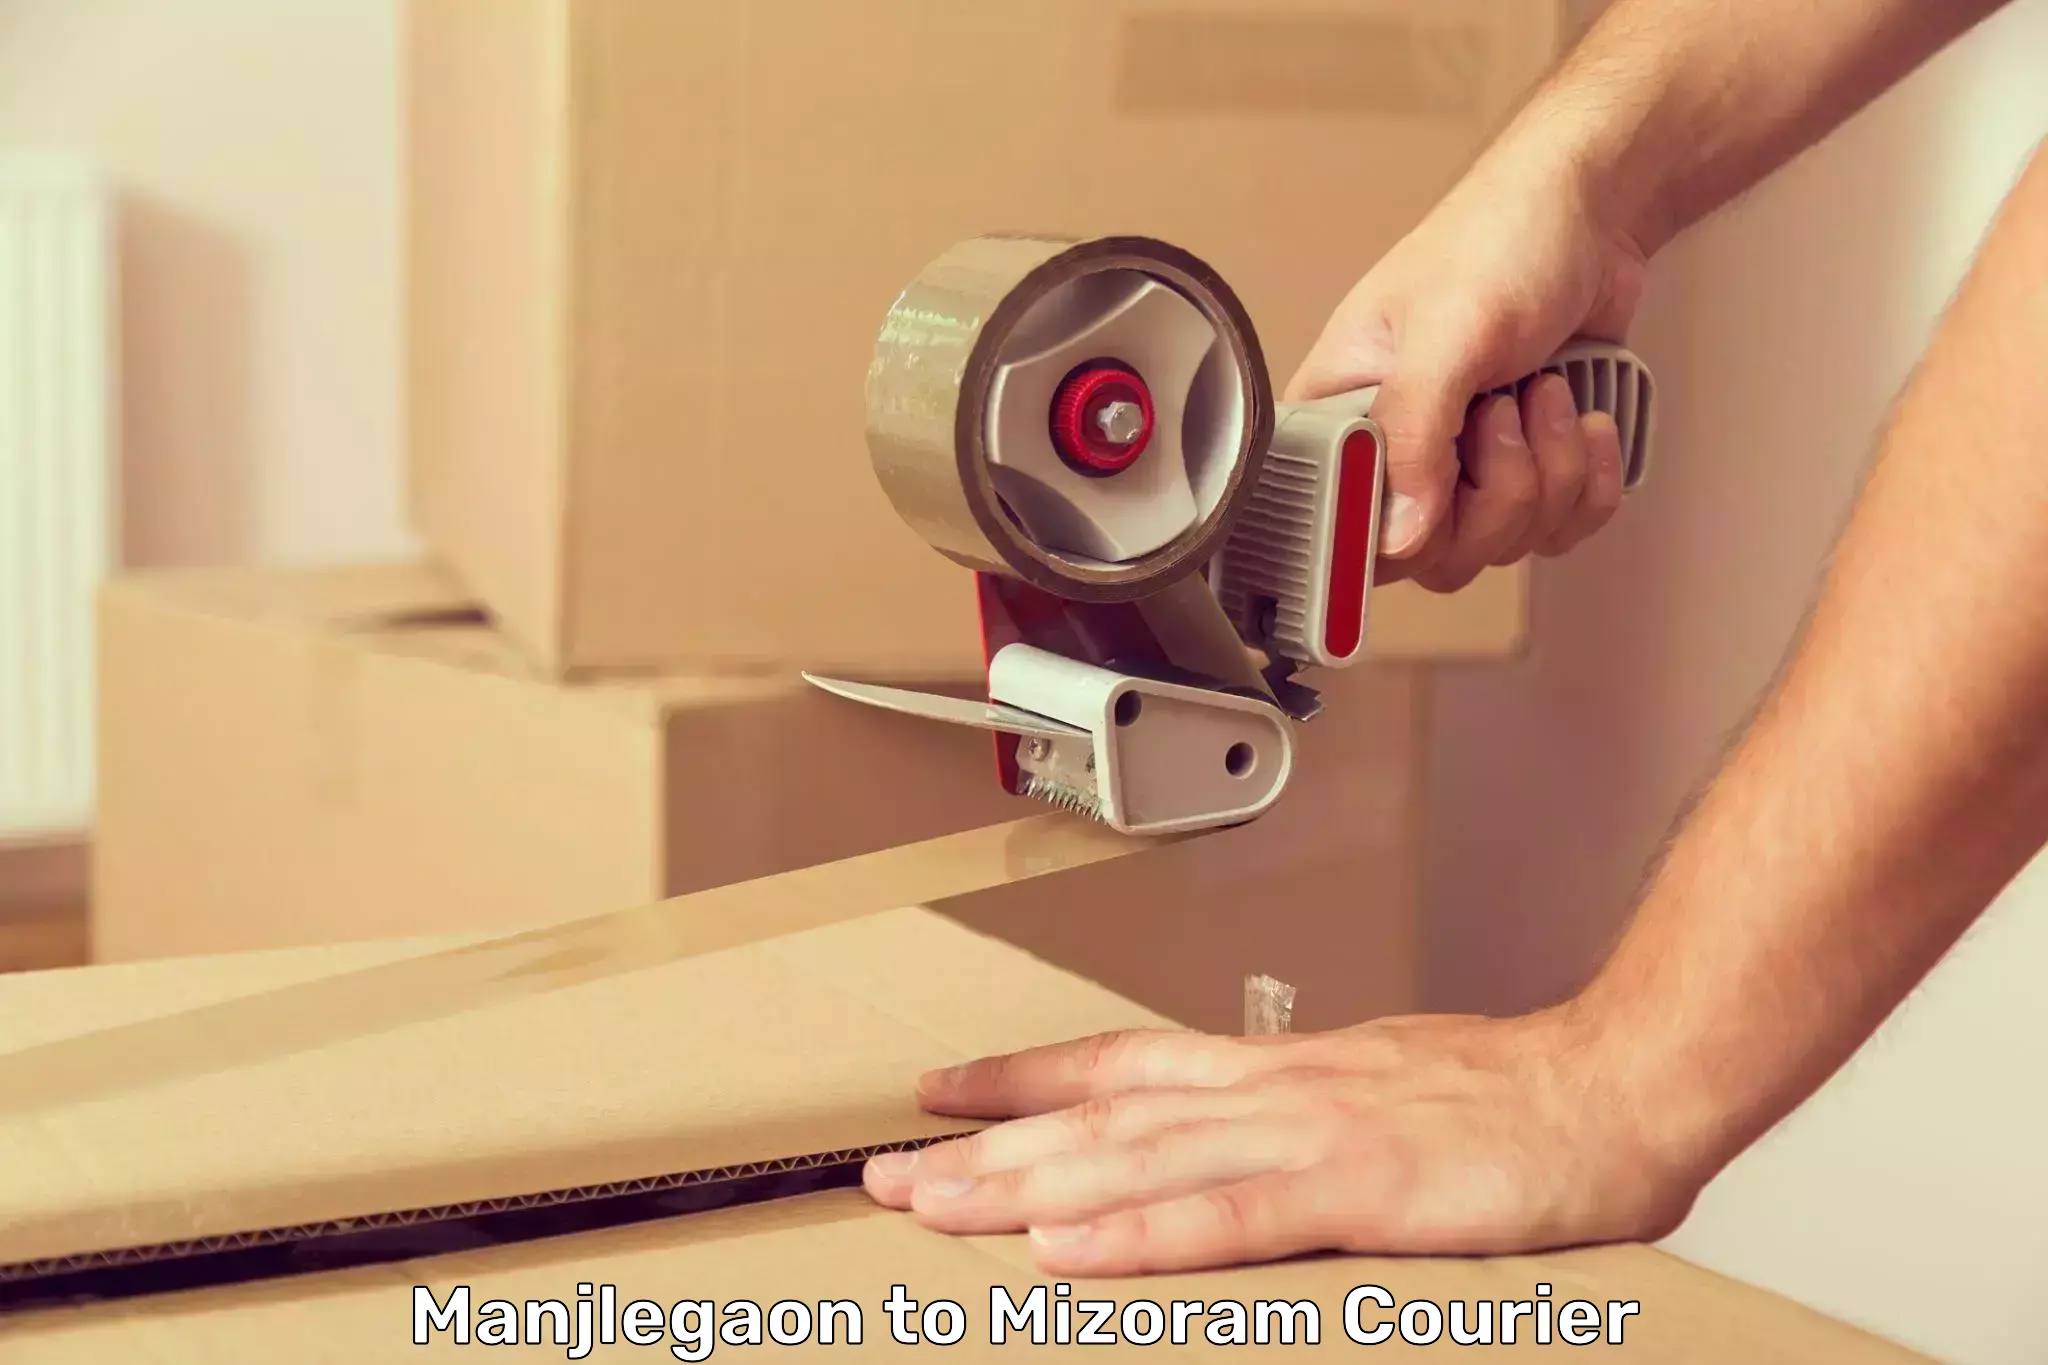 Same-day delivery solutions Manjlegaon to Mizoram